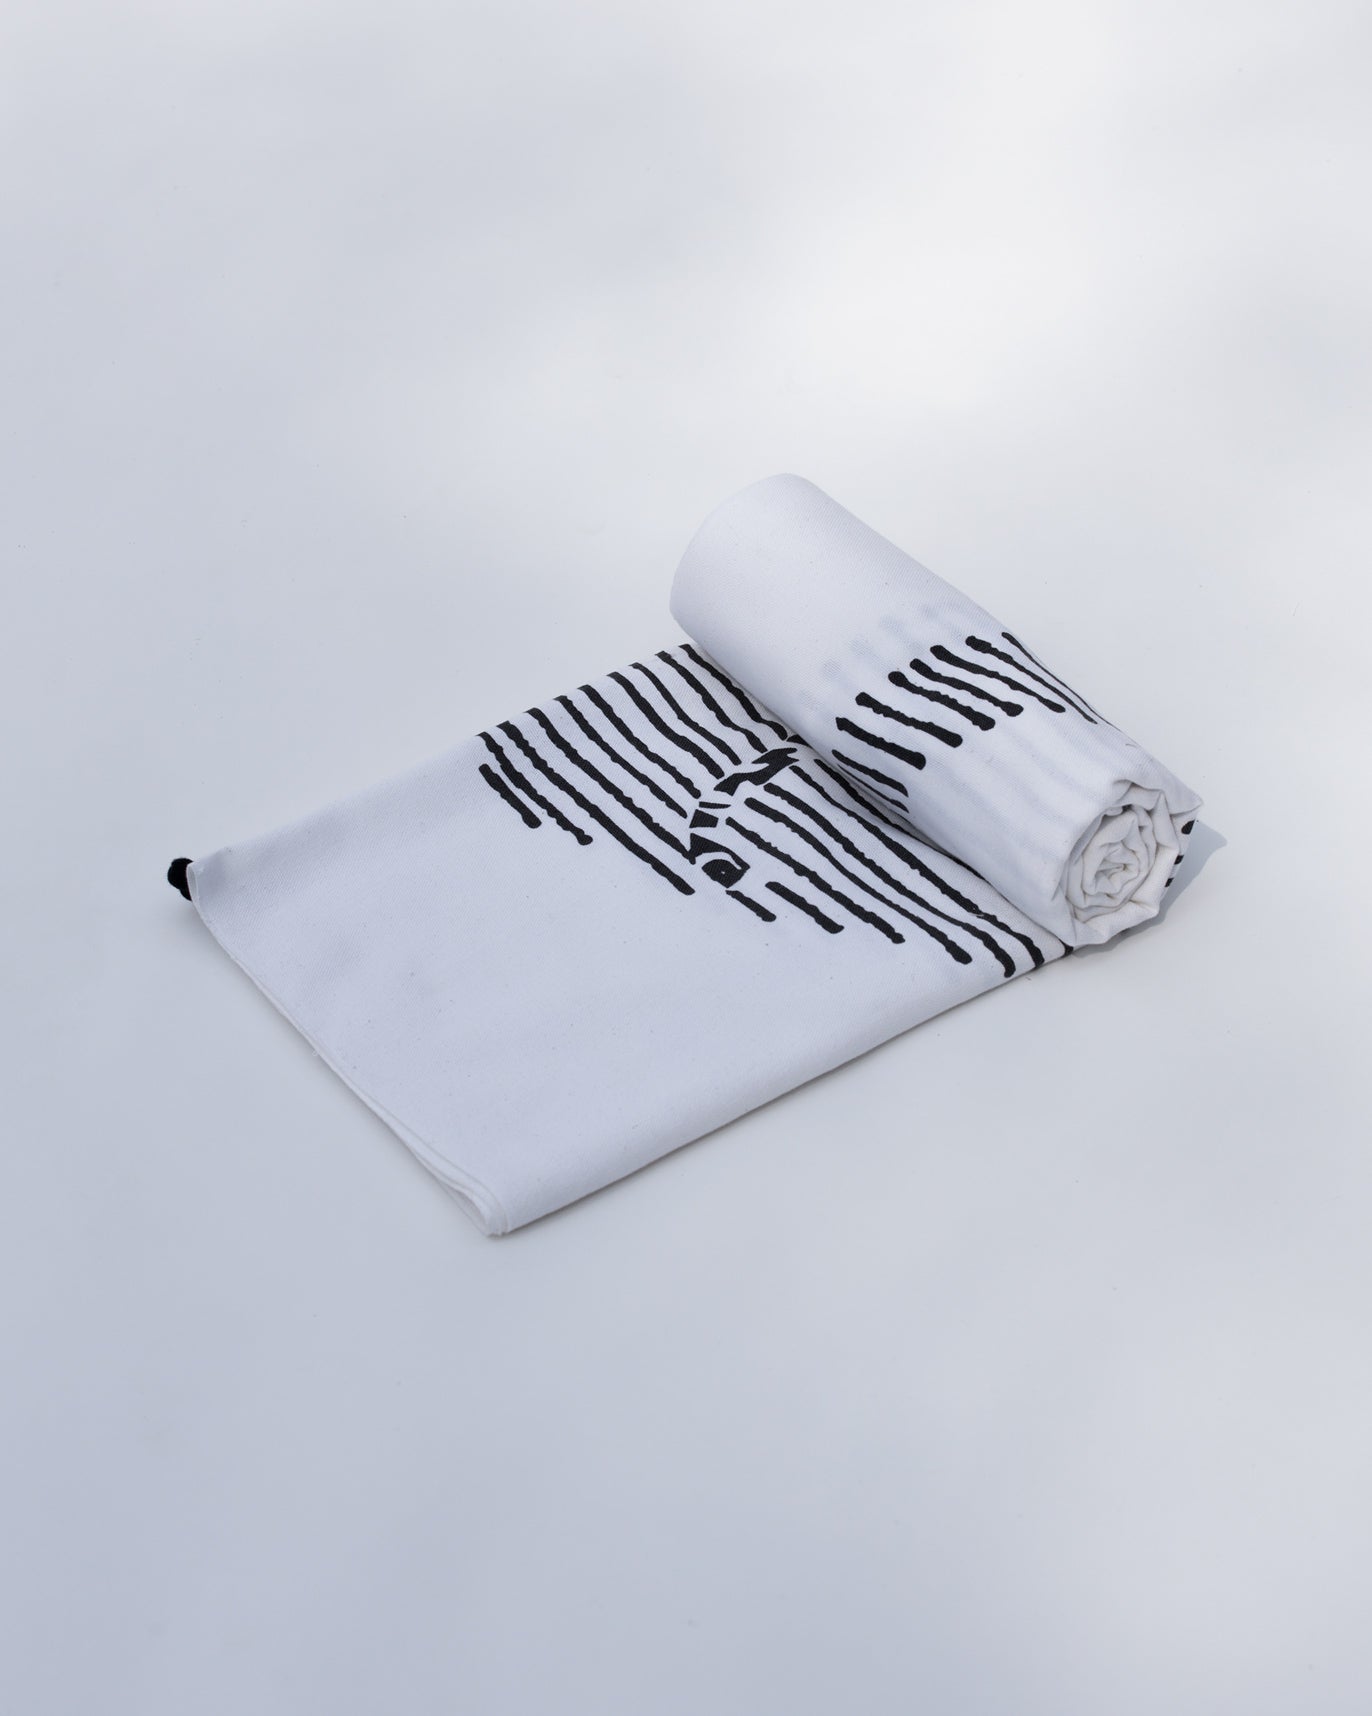 Halo Towel - White & Black